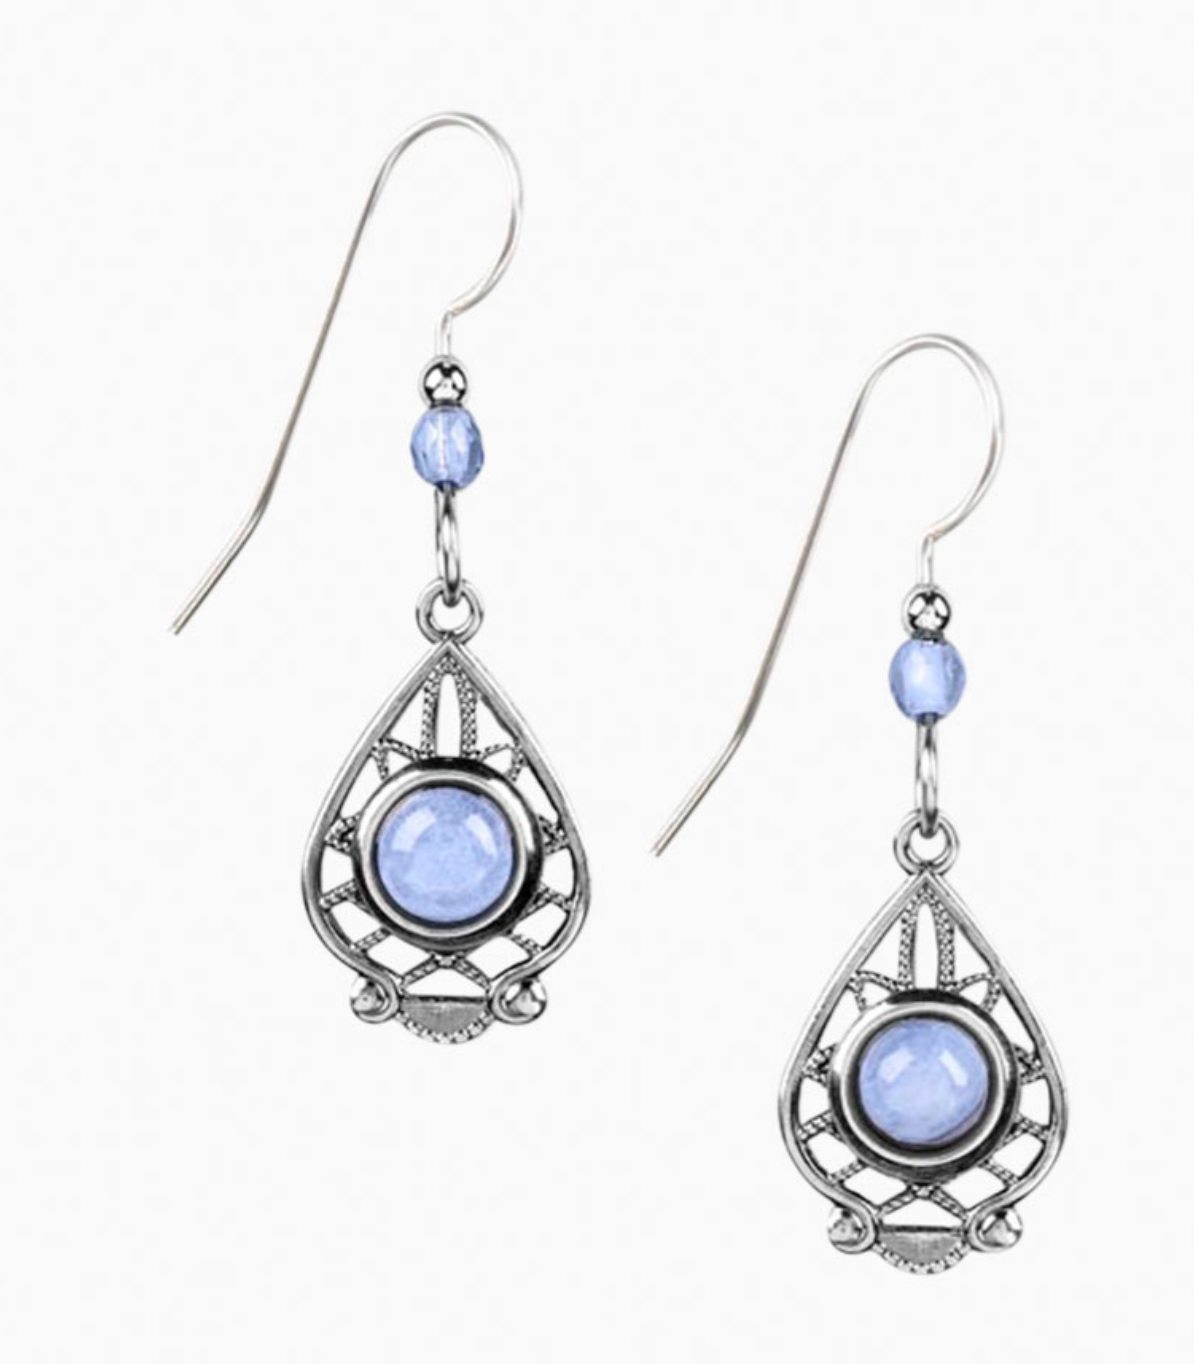 Blue Lace Agate Drop Earrings - Silver Forest